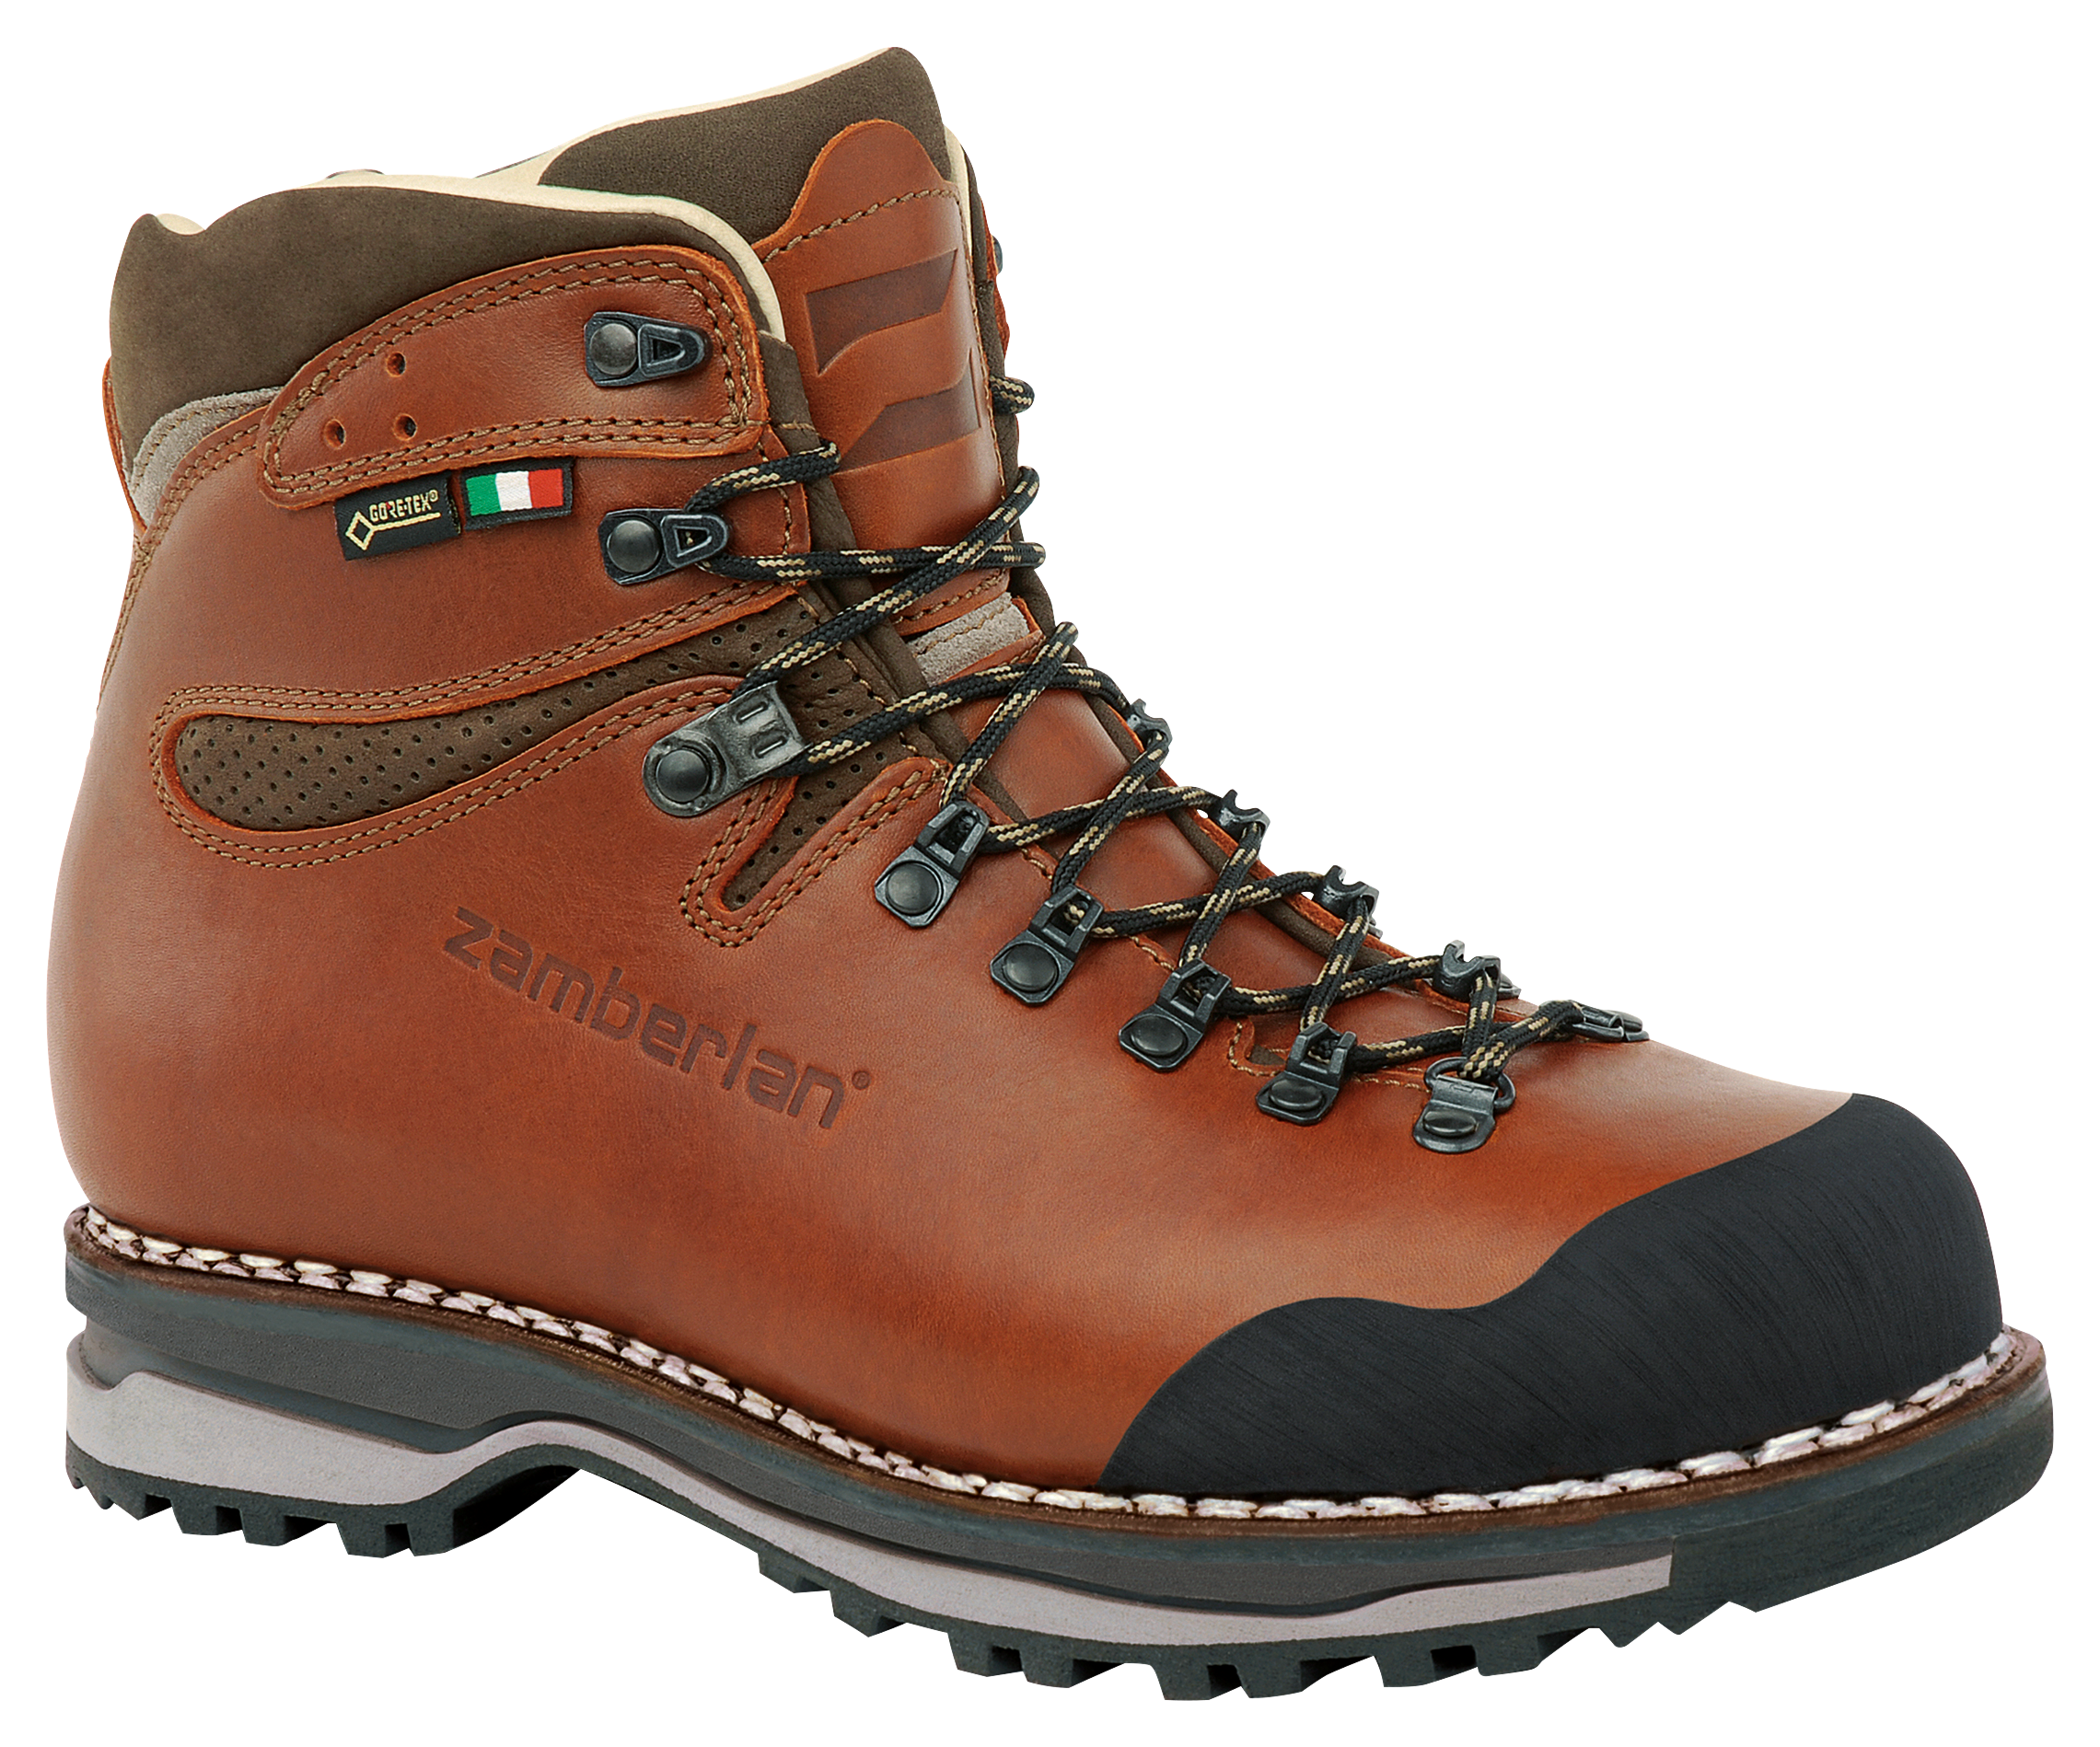 Zamberlan 1025 Tofane NW GTX RR Waterproof Hiking Boots for Men - Waxed Brick - 12M